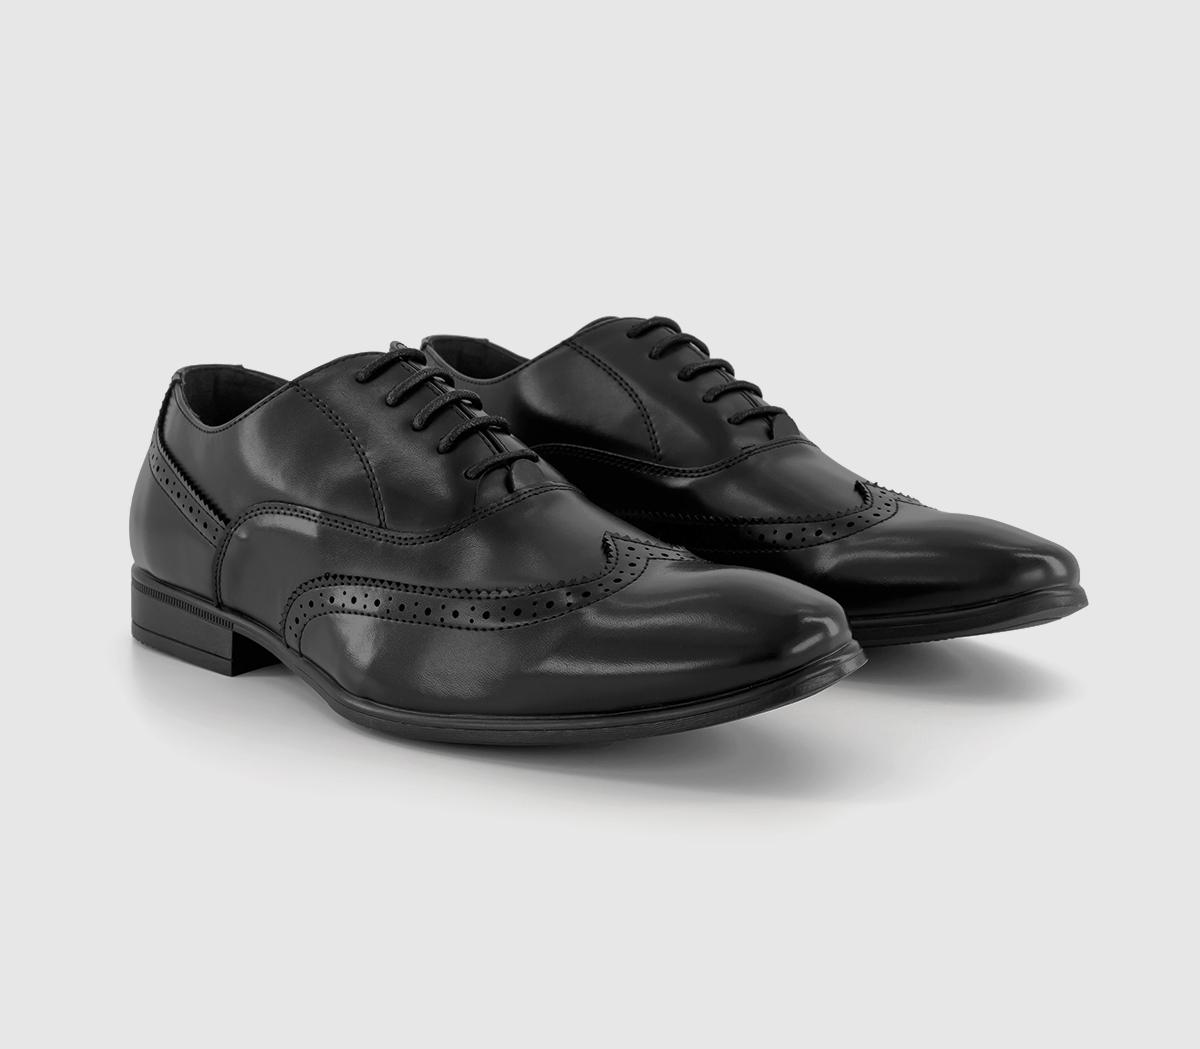 OFFICE Mens Martel Wingtip Oxford Shoes Black, 11